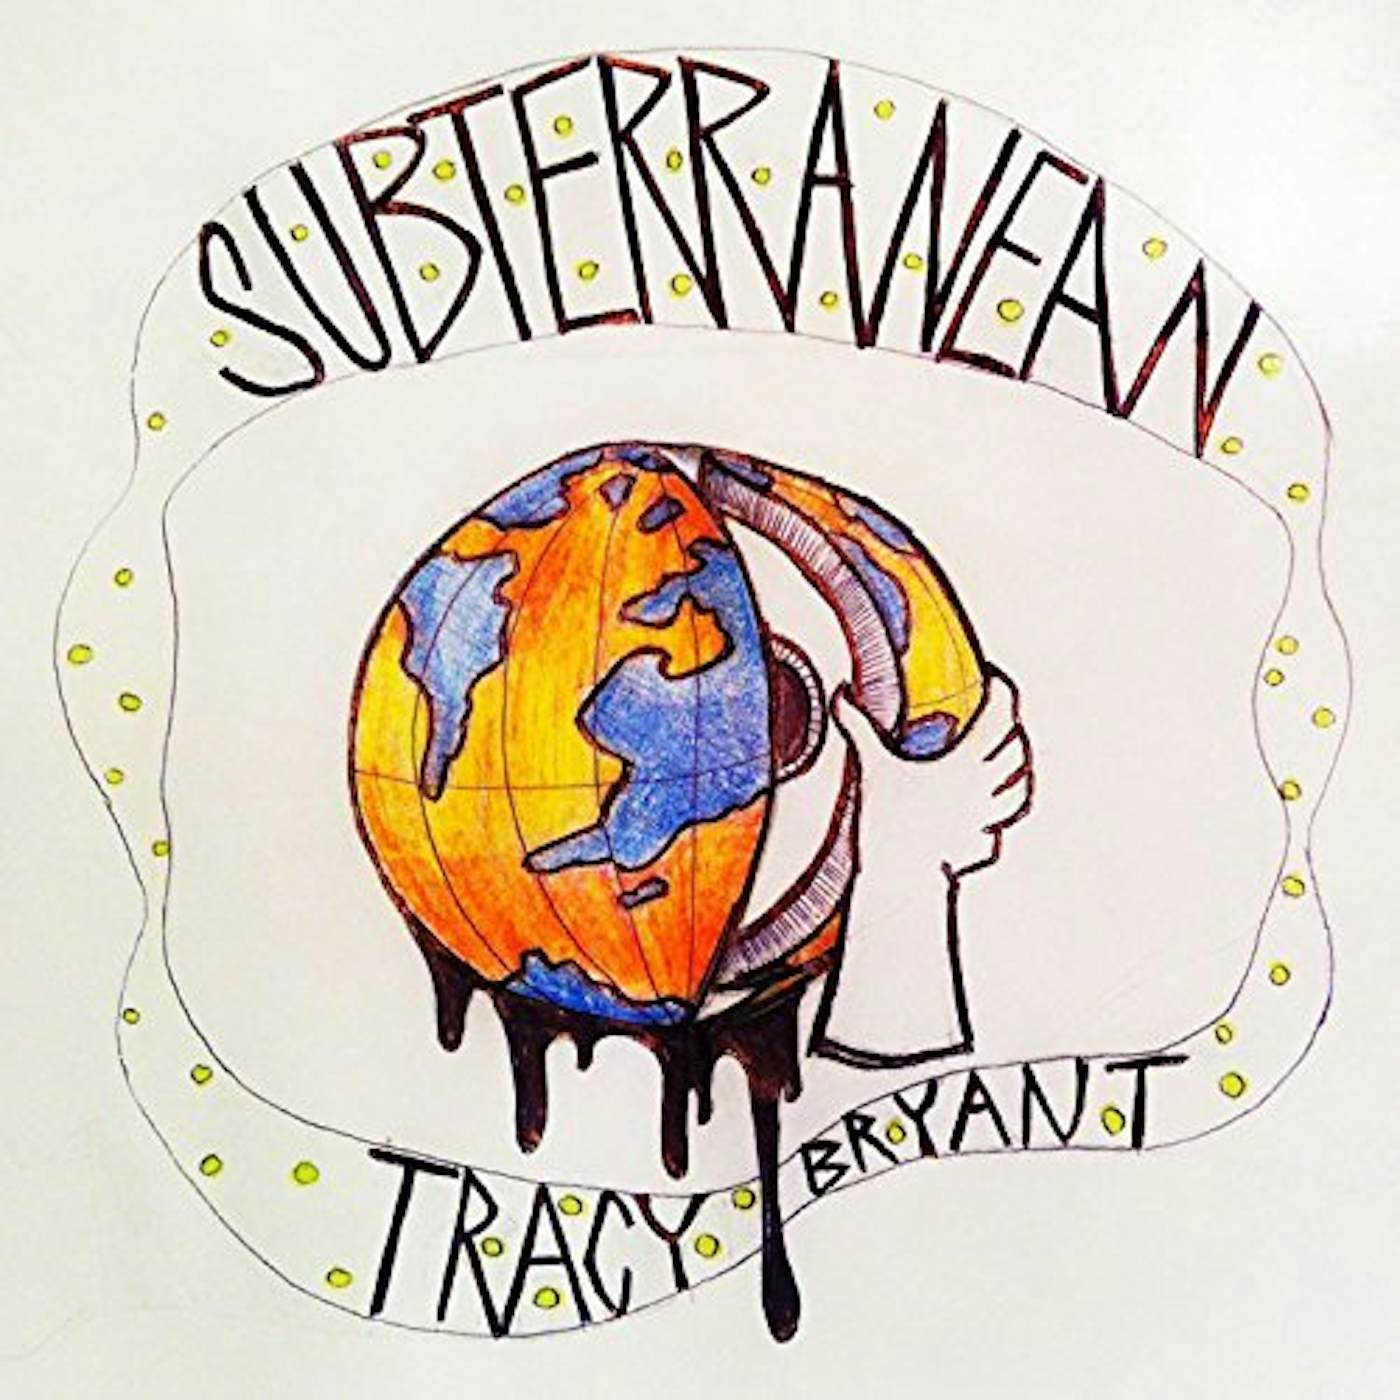 Tracy Bryant Subterranean Vinyl Record